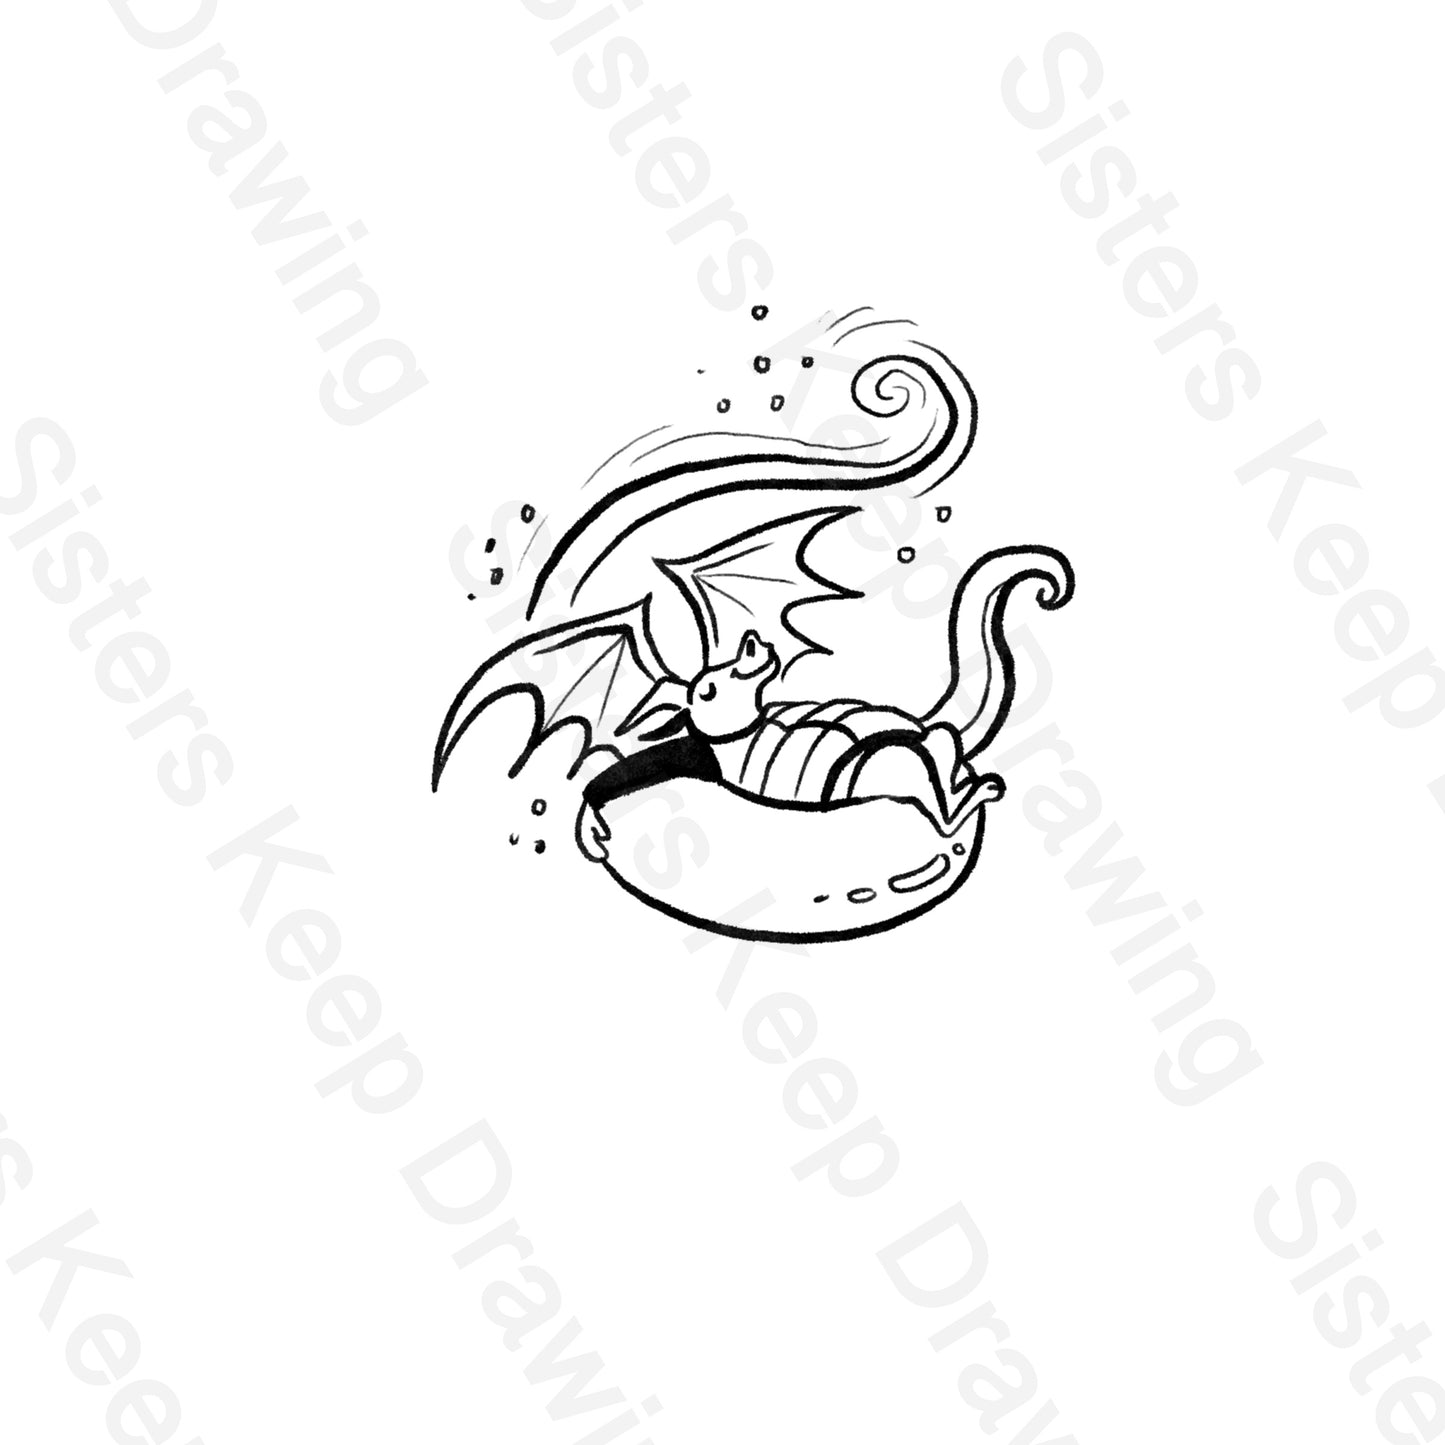 Tiny Dragon tubing-Tattoo Transparent Permission PNG- instant download digital printable artw